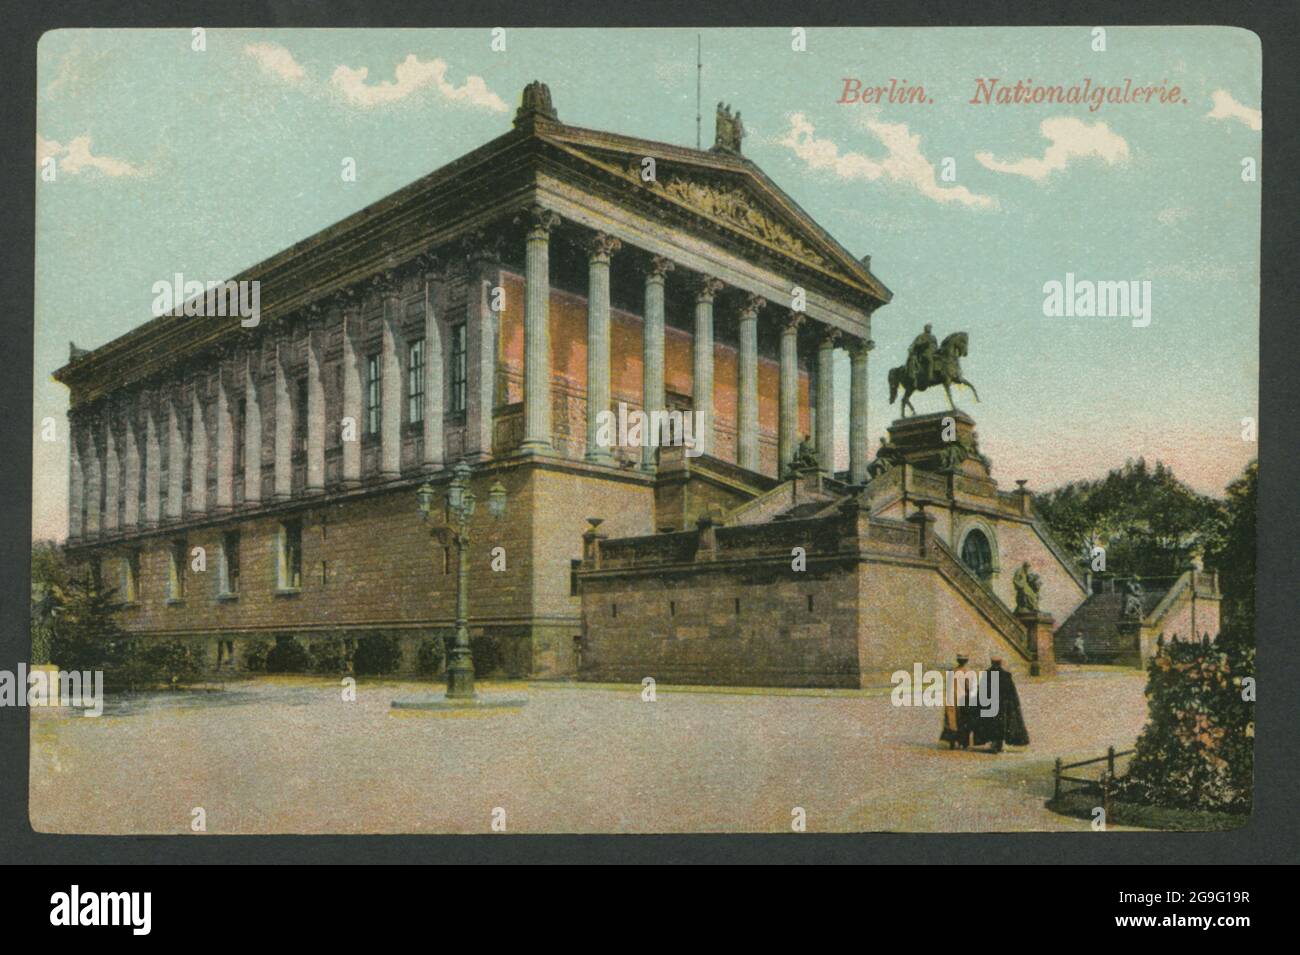 Geographie / Reisen, Deutschland, Berlin, Nationalgalerie, Postkarte, Gesendet 05. 03. 1915, ADDITIONAL-RIGHTS-CLEARANCE-INFO-NOT-AVAILABLE Stockfoto